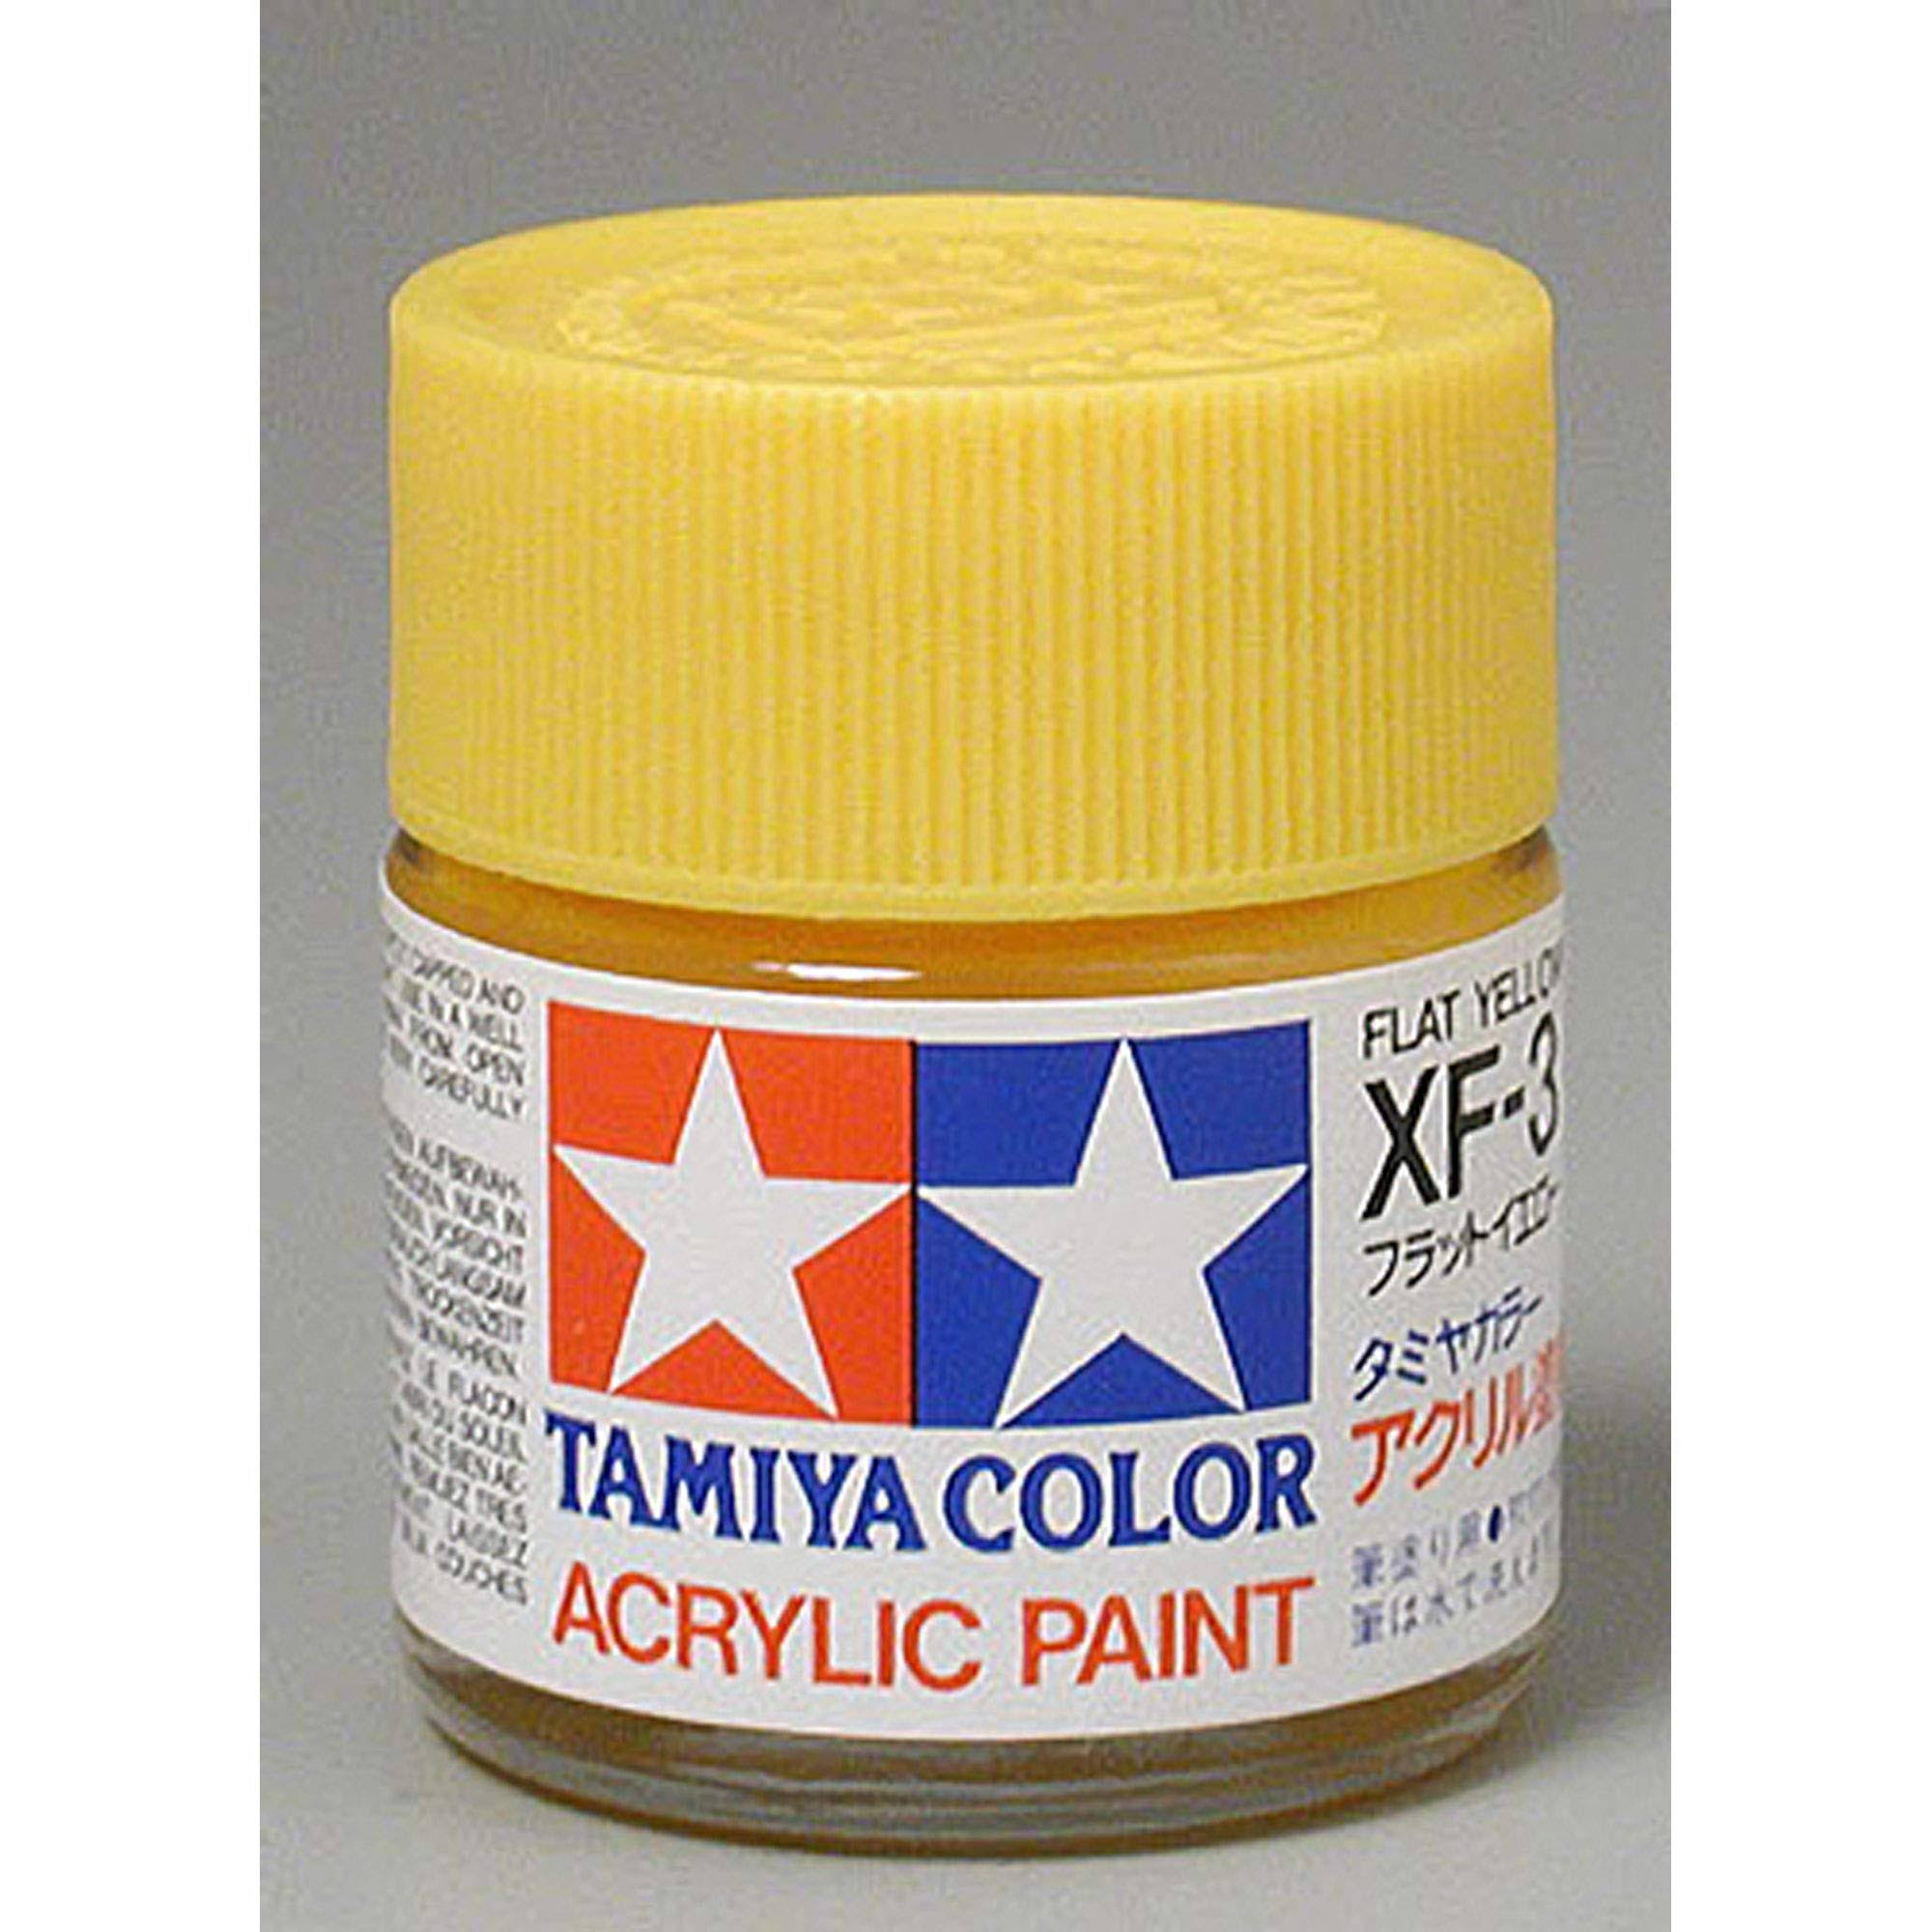 Tamiya Flat XF3 Acrylic Hobby Model Paint - Yellow